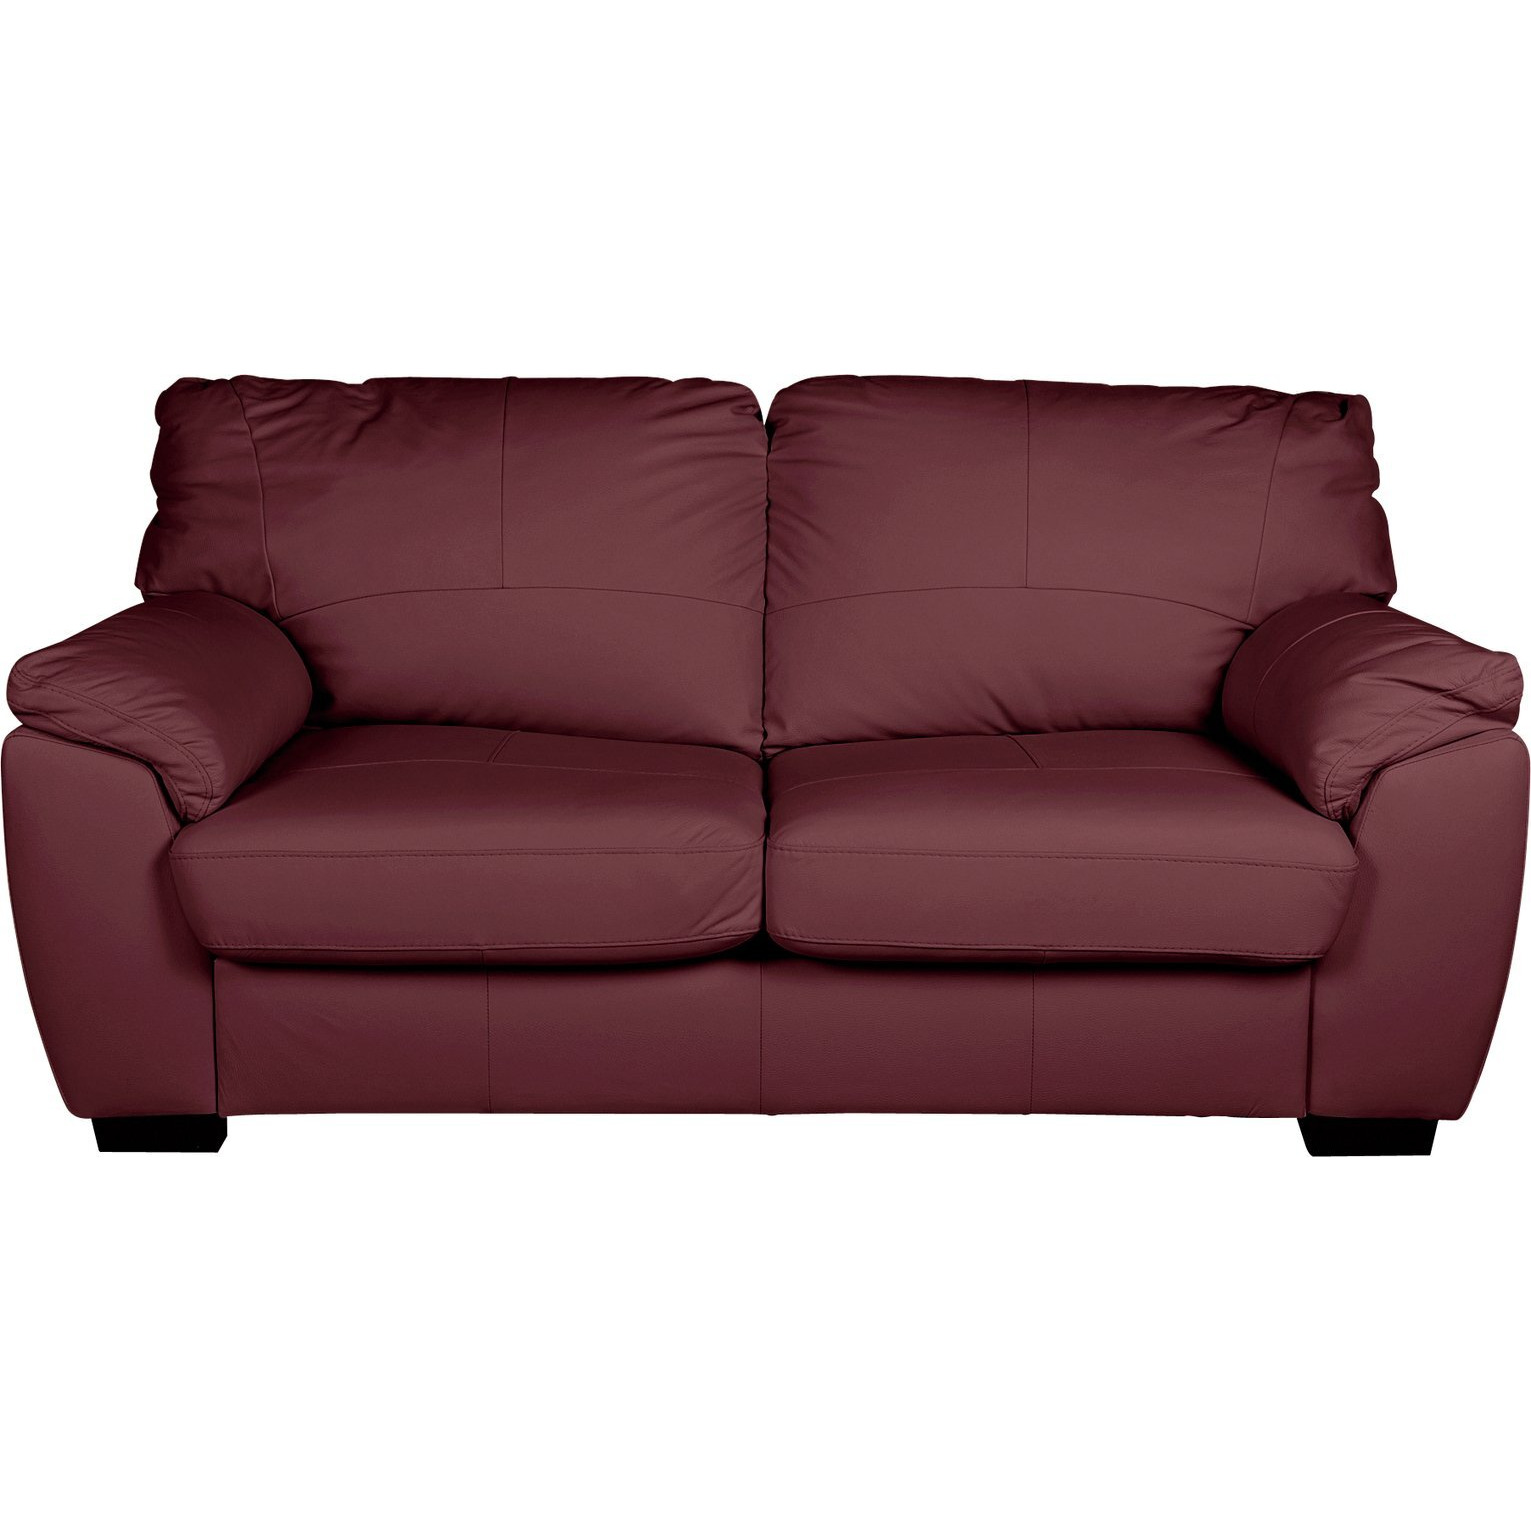 Argos Home Milano Leather 3 Seater Sofa - Burgundy - image 1